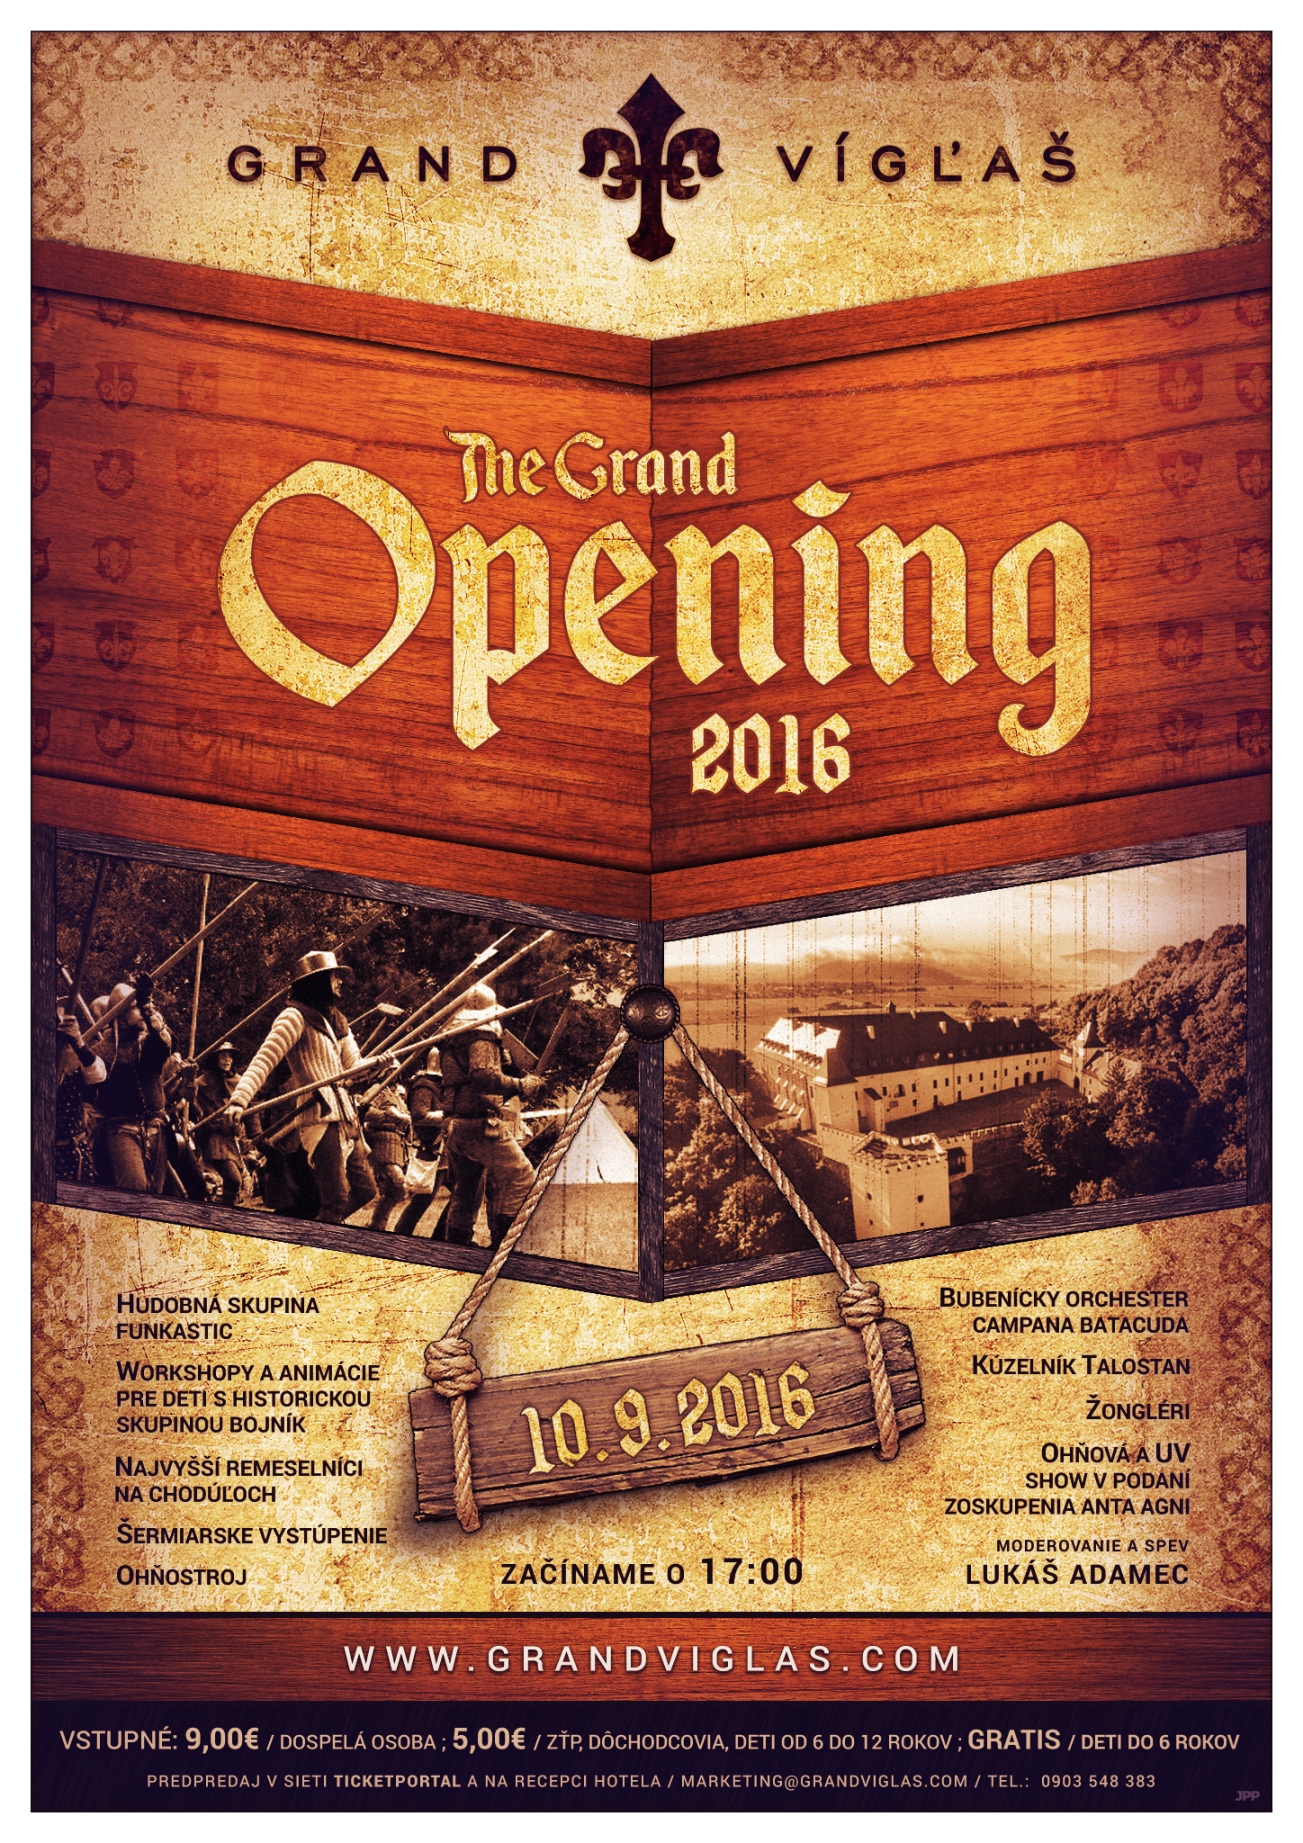 The Grand Opening Vga 2016 - 2. vroie otvorenia zmku